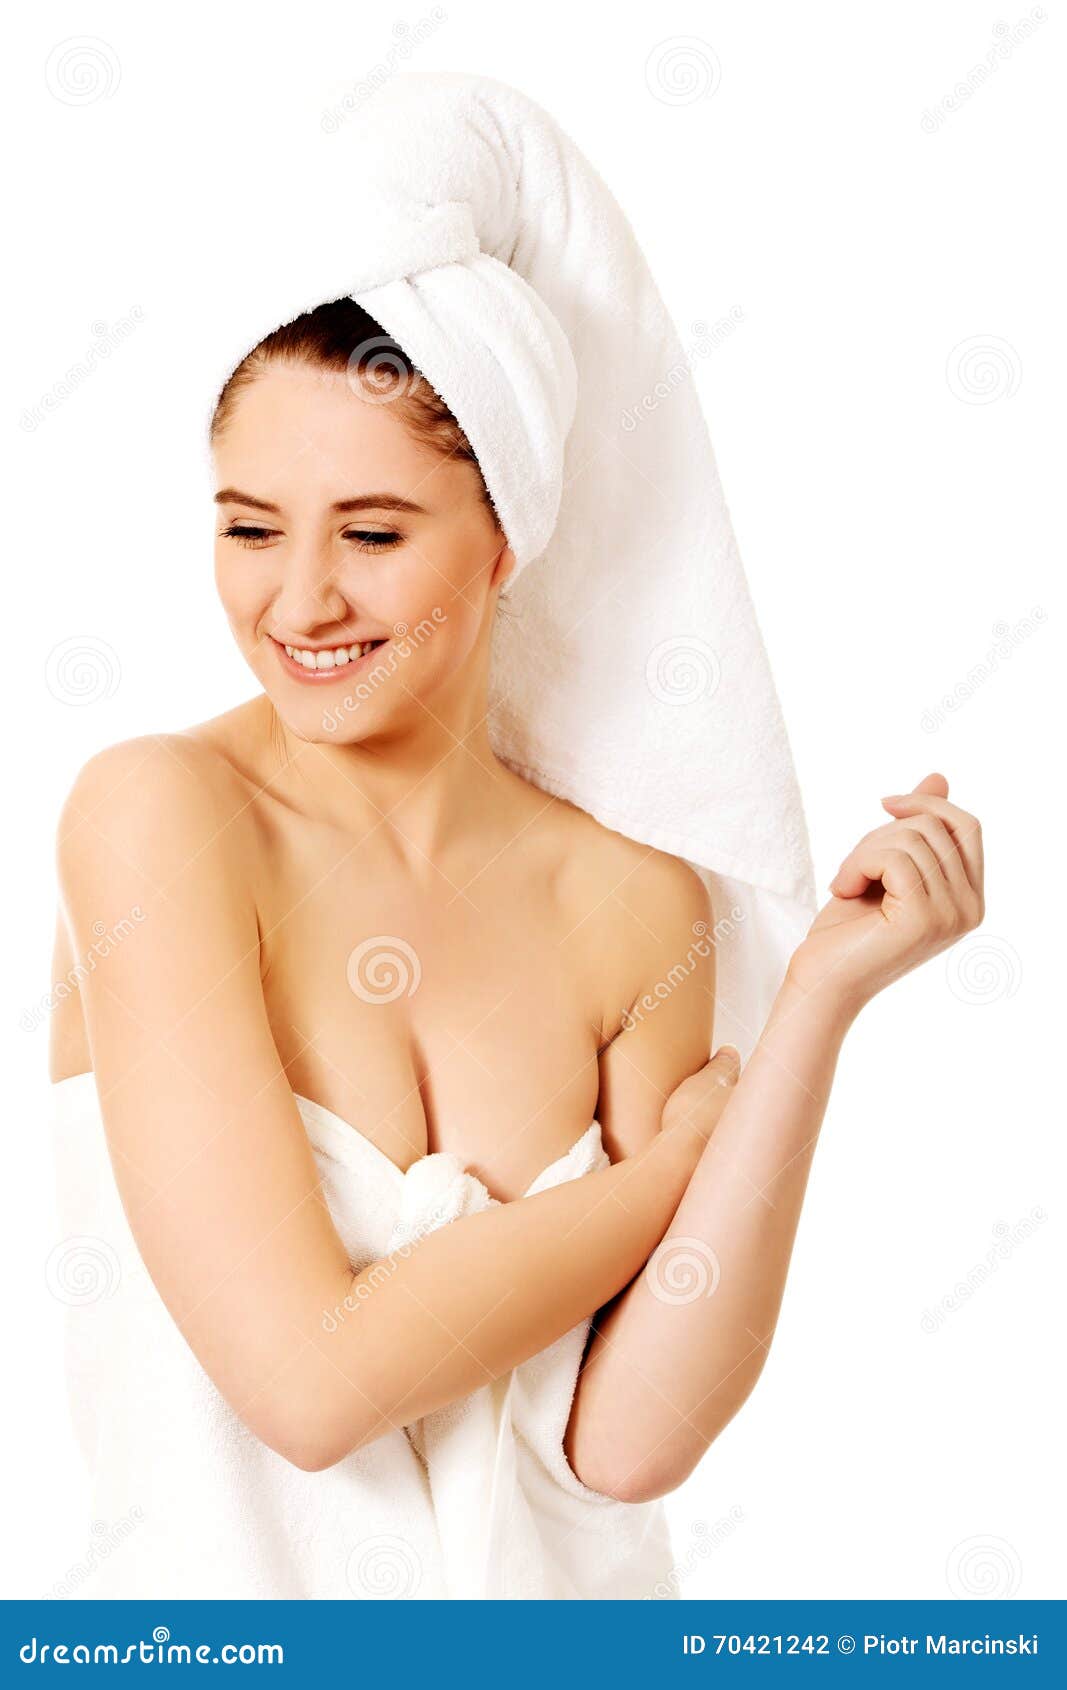 Обернутая полотенцем. Девушка завернутая в полотенце. Красивая девушка в полотенце. Девушка обернутая в полотенце. Девушка обёрнута в палатенце.